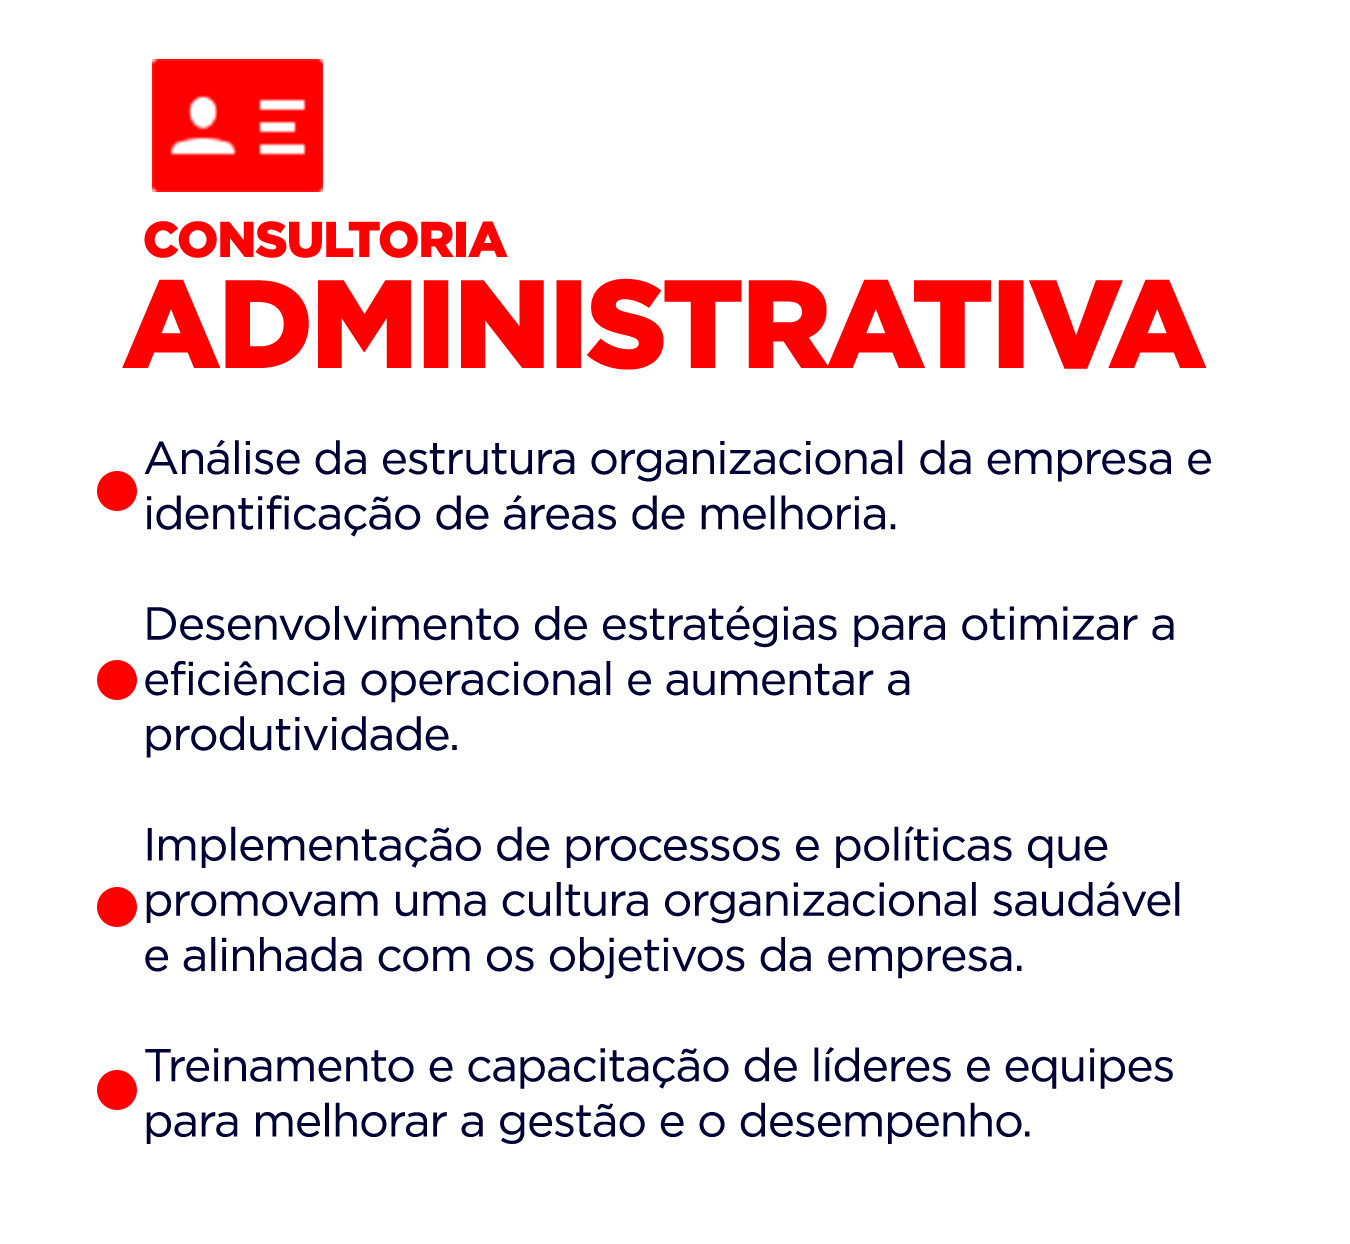 administrativa